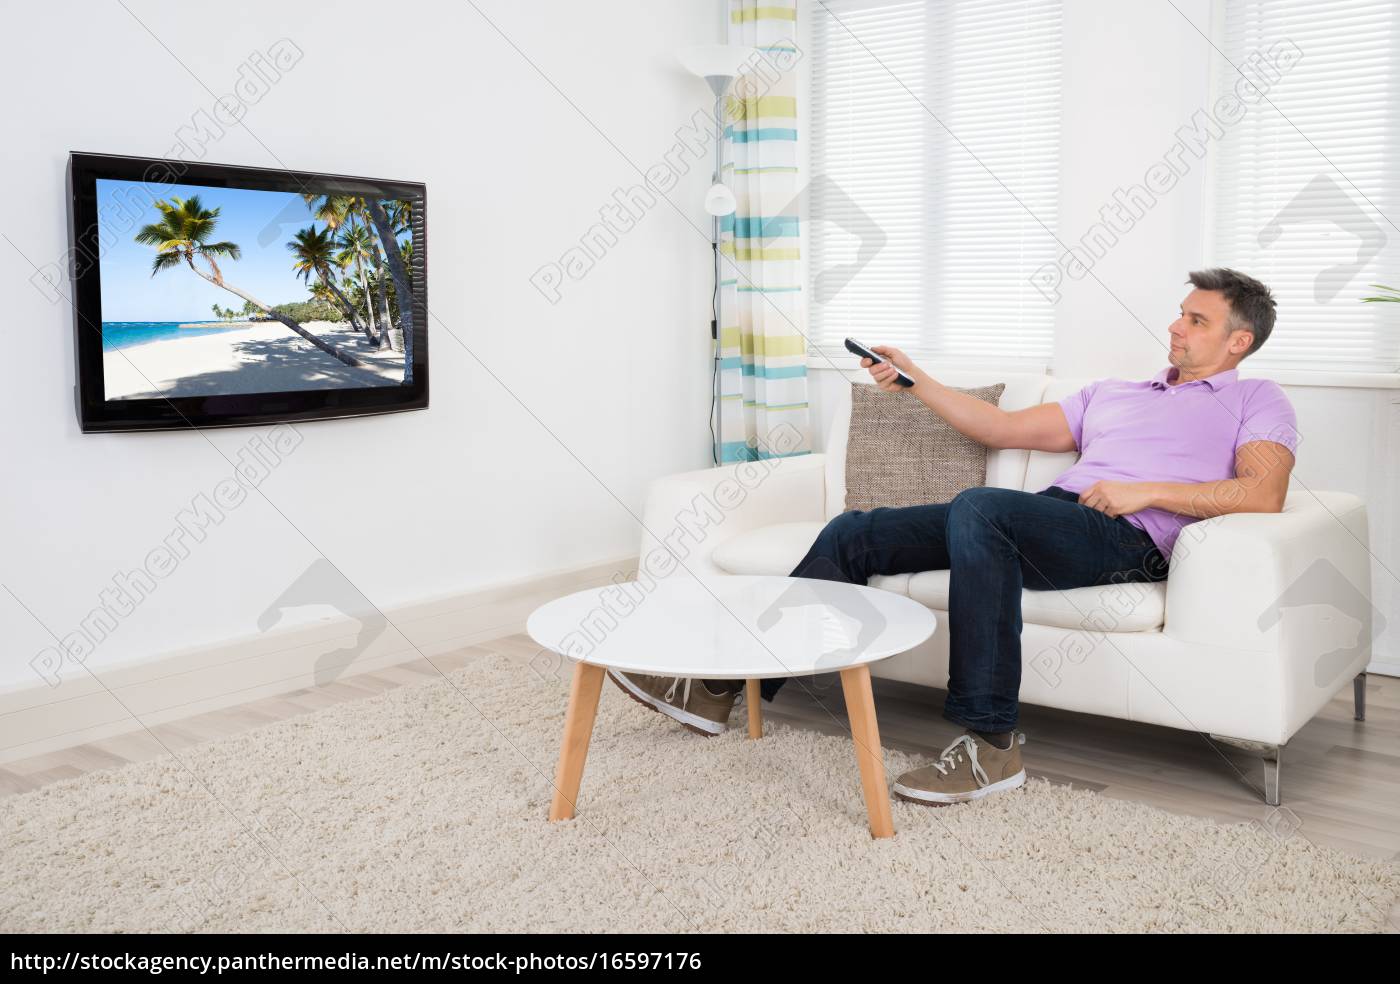 Lizenzfreies Foto 16597176 Mature Man With Remote Control Watching Television